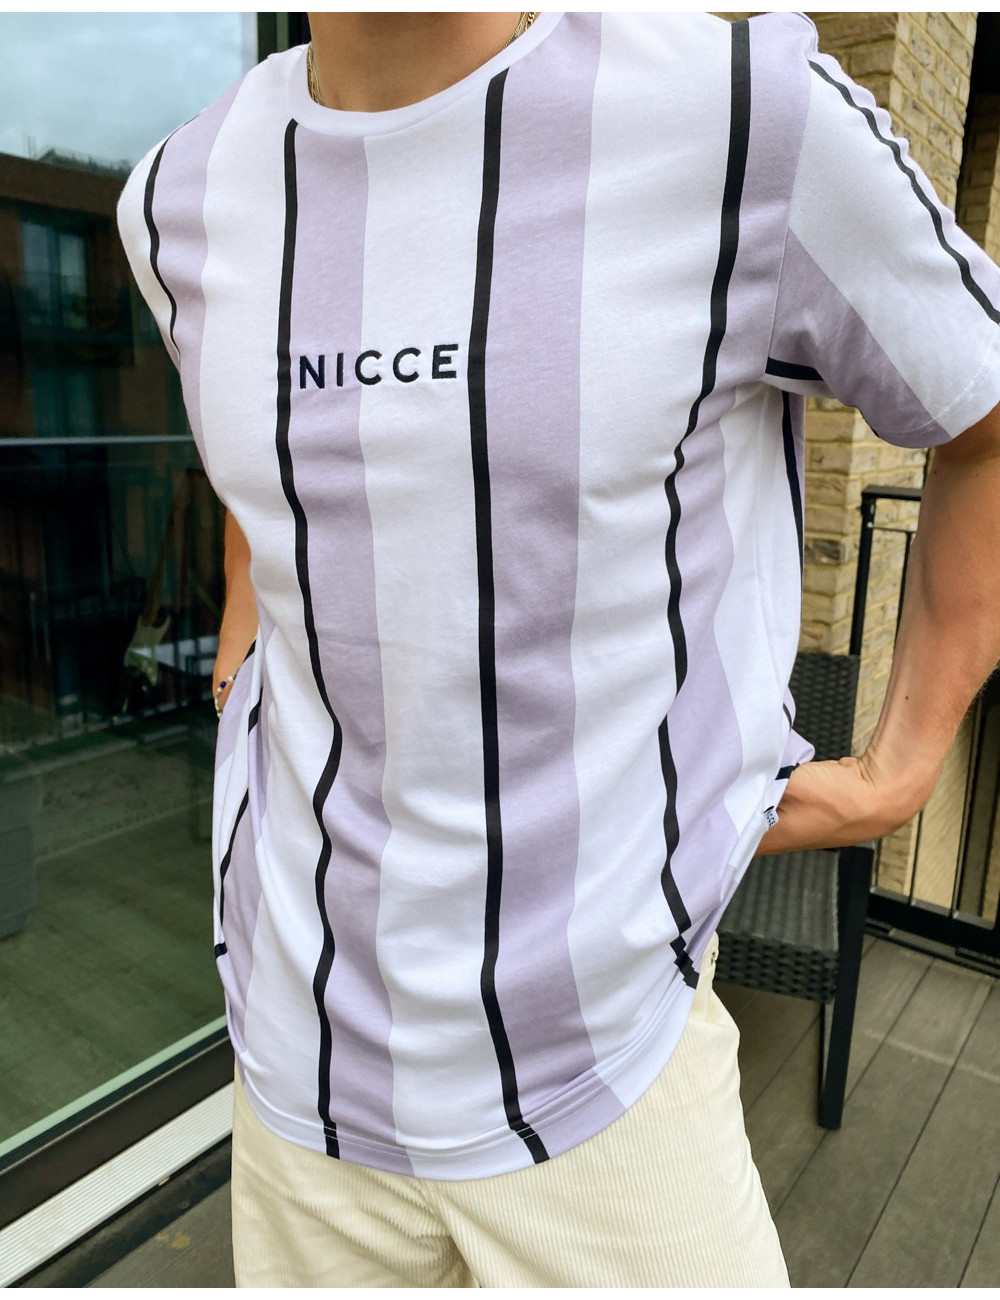 Nicce stripe t-shirt in lilac